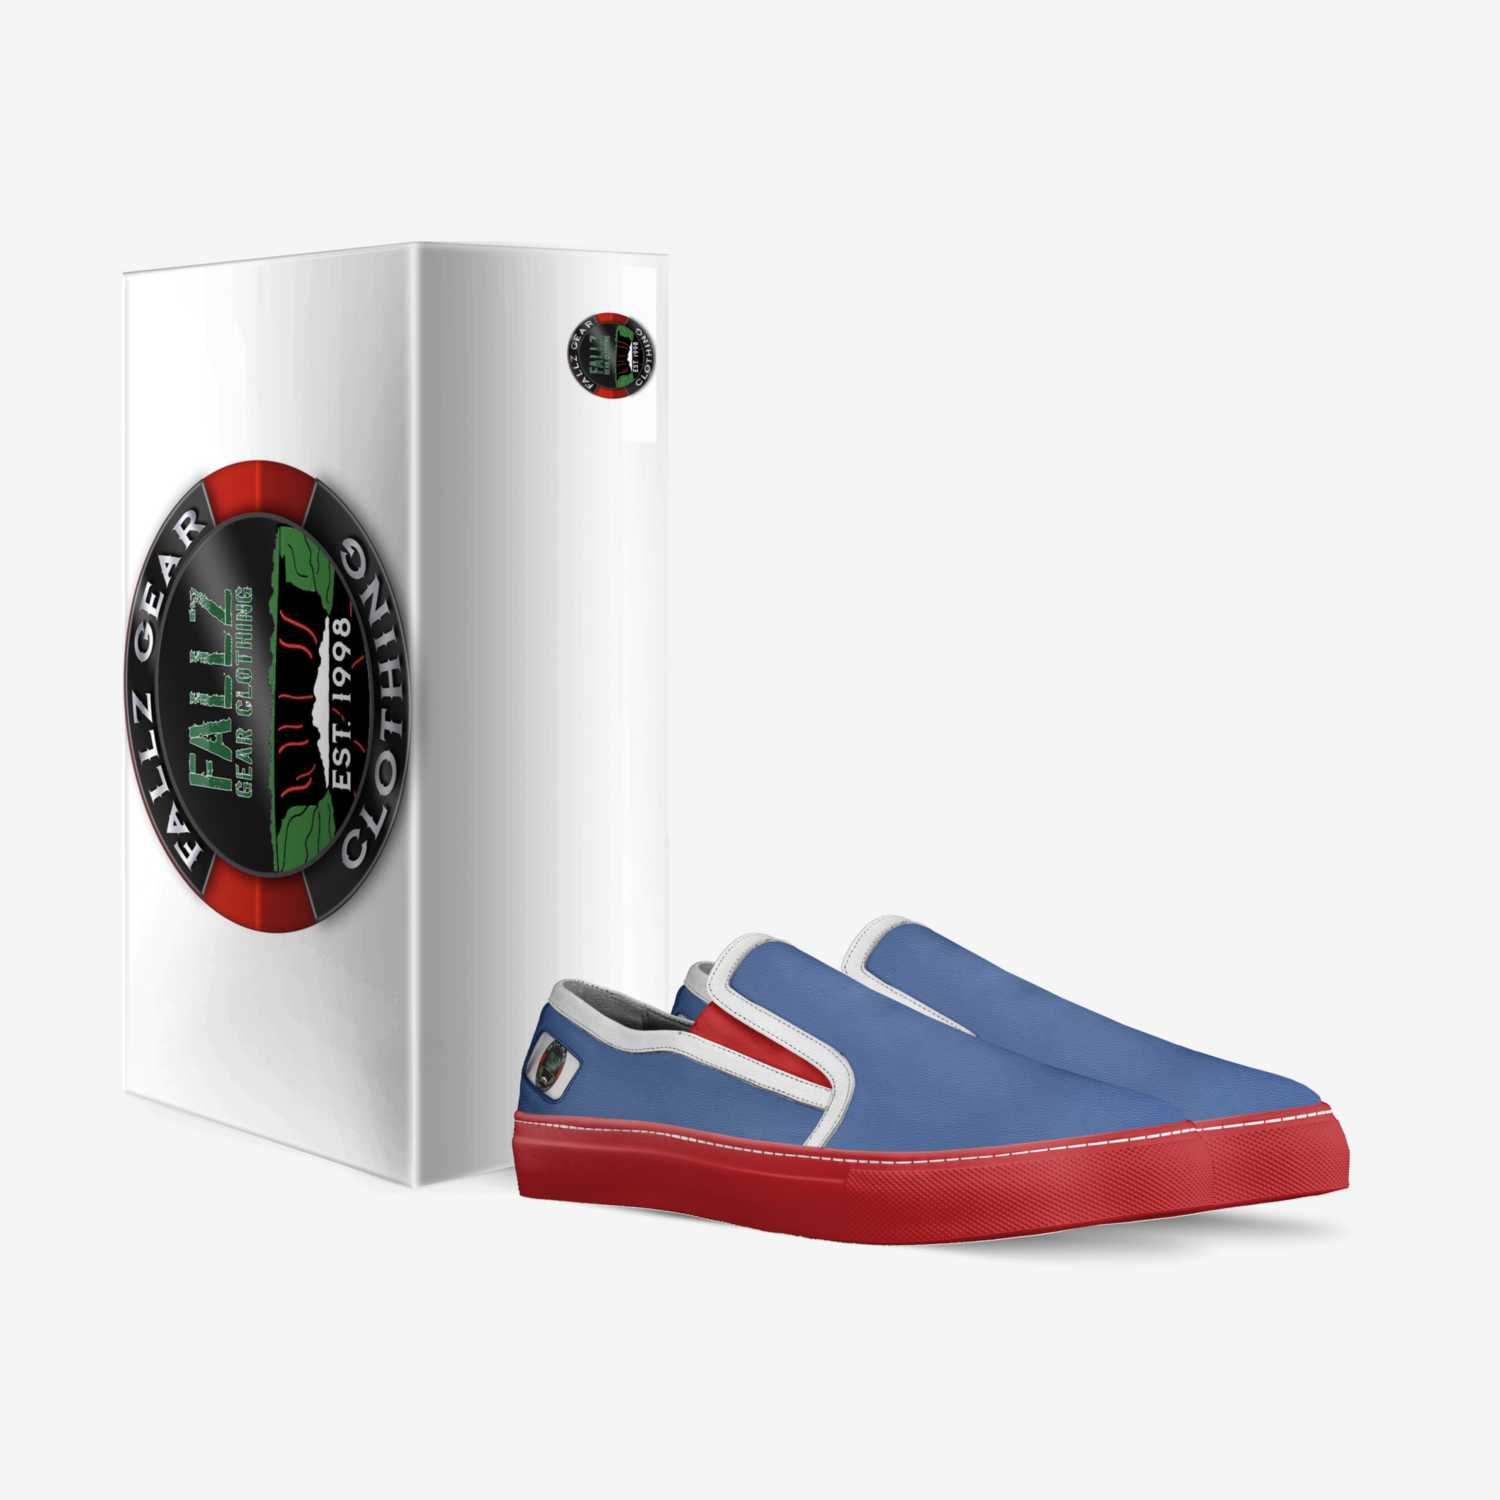 Fallz Gear: Hero custom made in Italy shoes by Fallz Gear | Box view